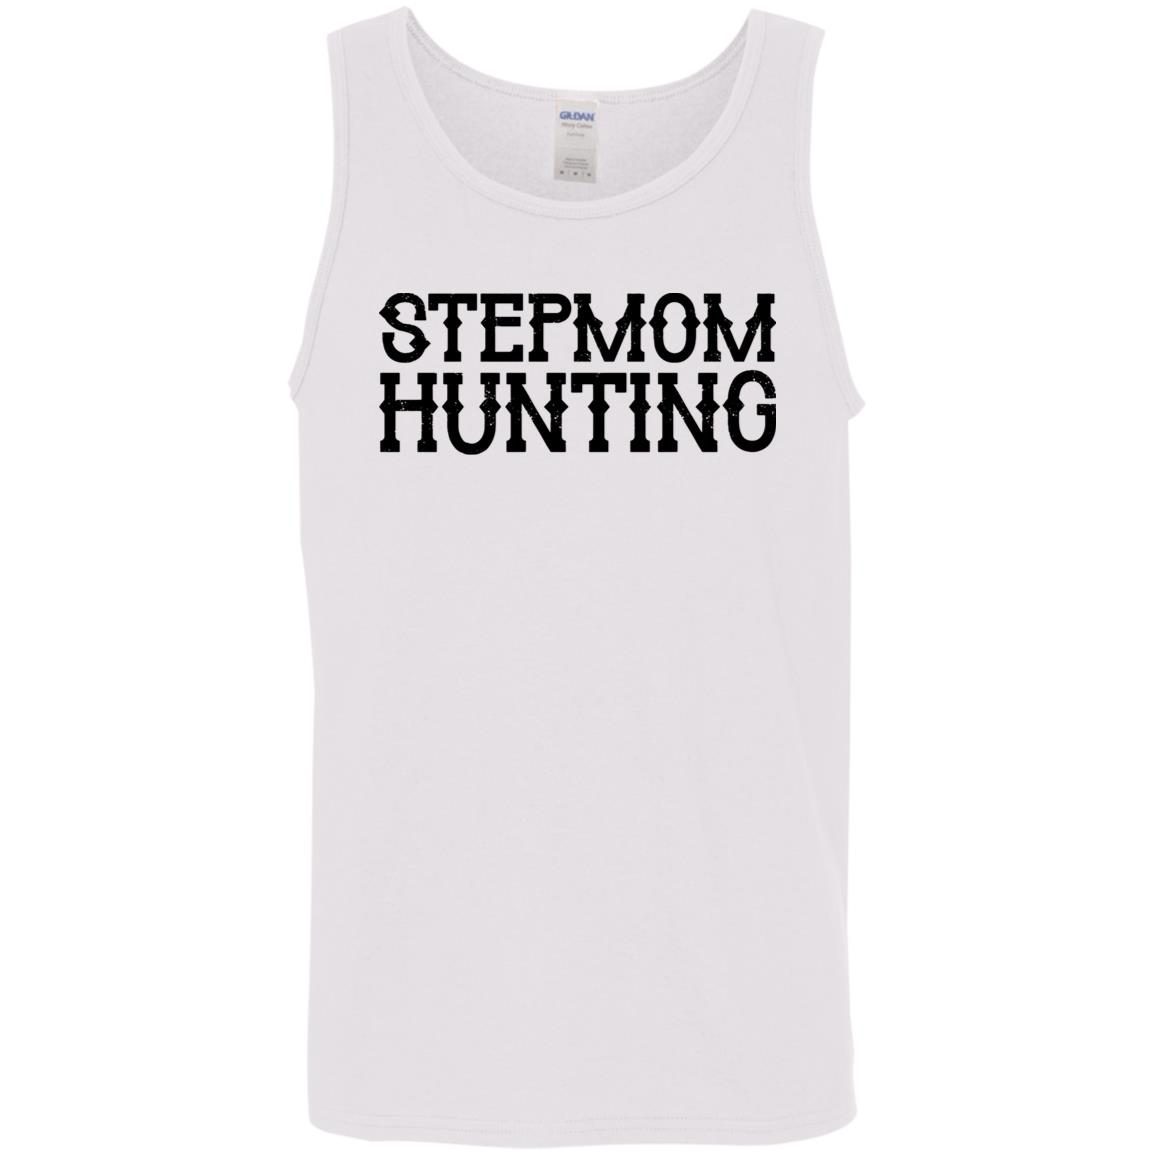 Stepmom Hunting Shirt Funny Quote shirt